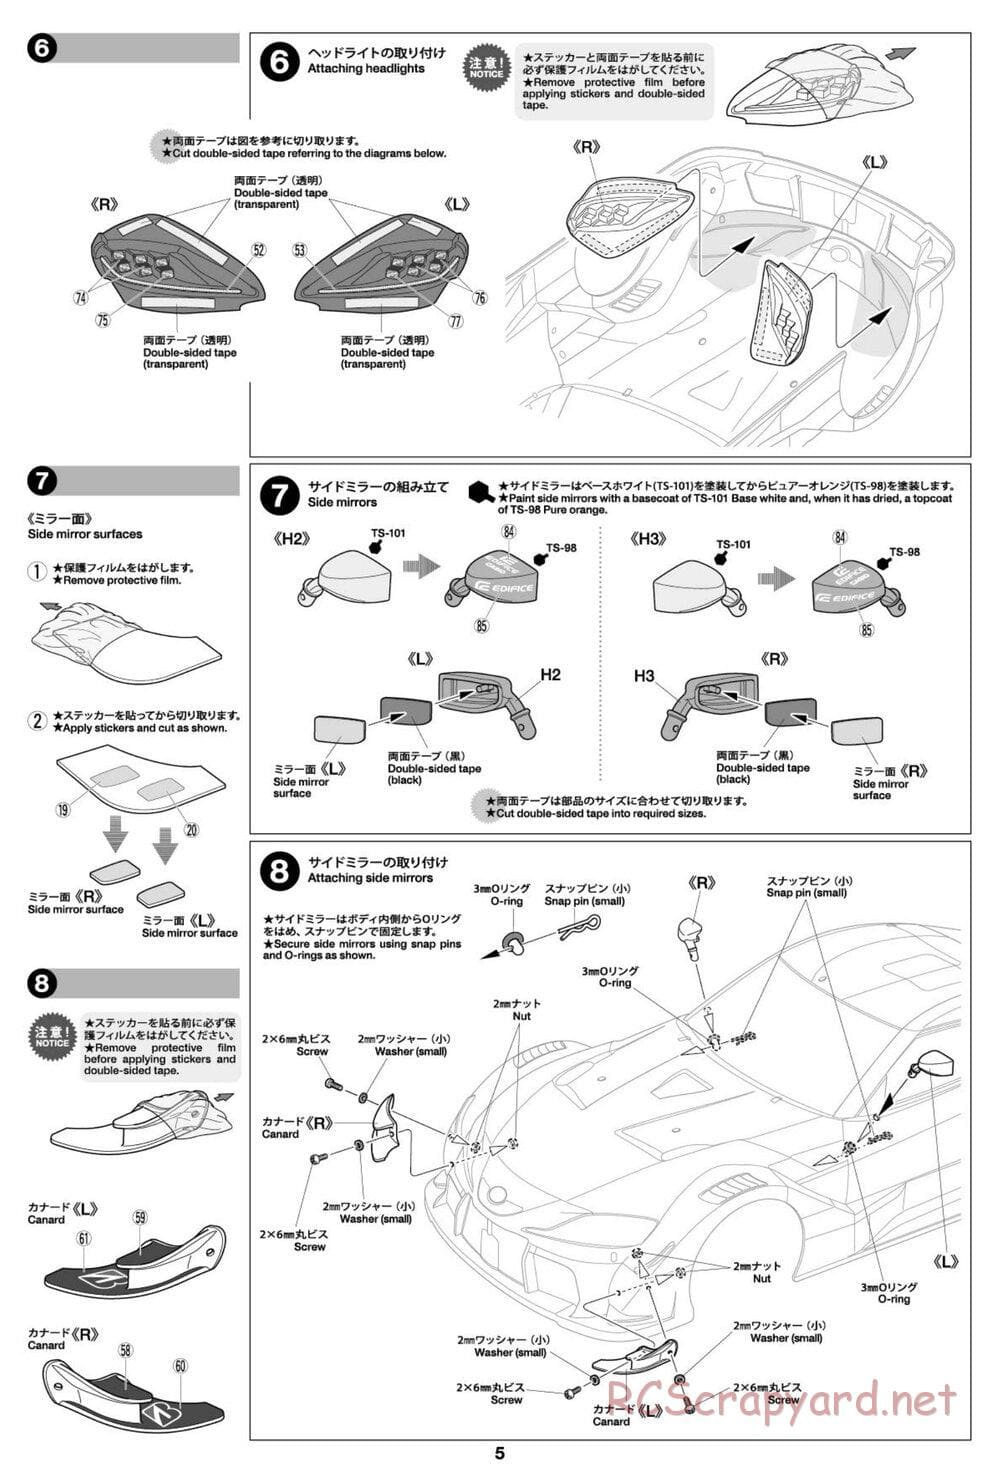 Tamiya - au TOM'S GR Supra - TT-02 Chassis - Body Manual - Page 5